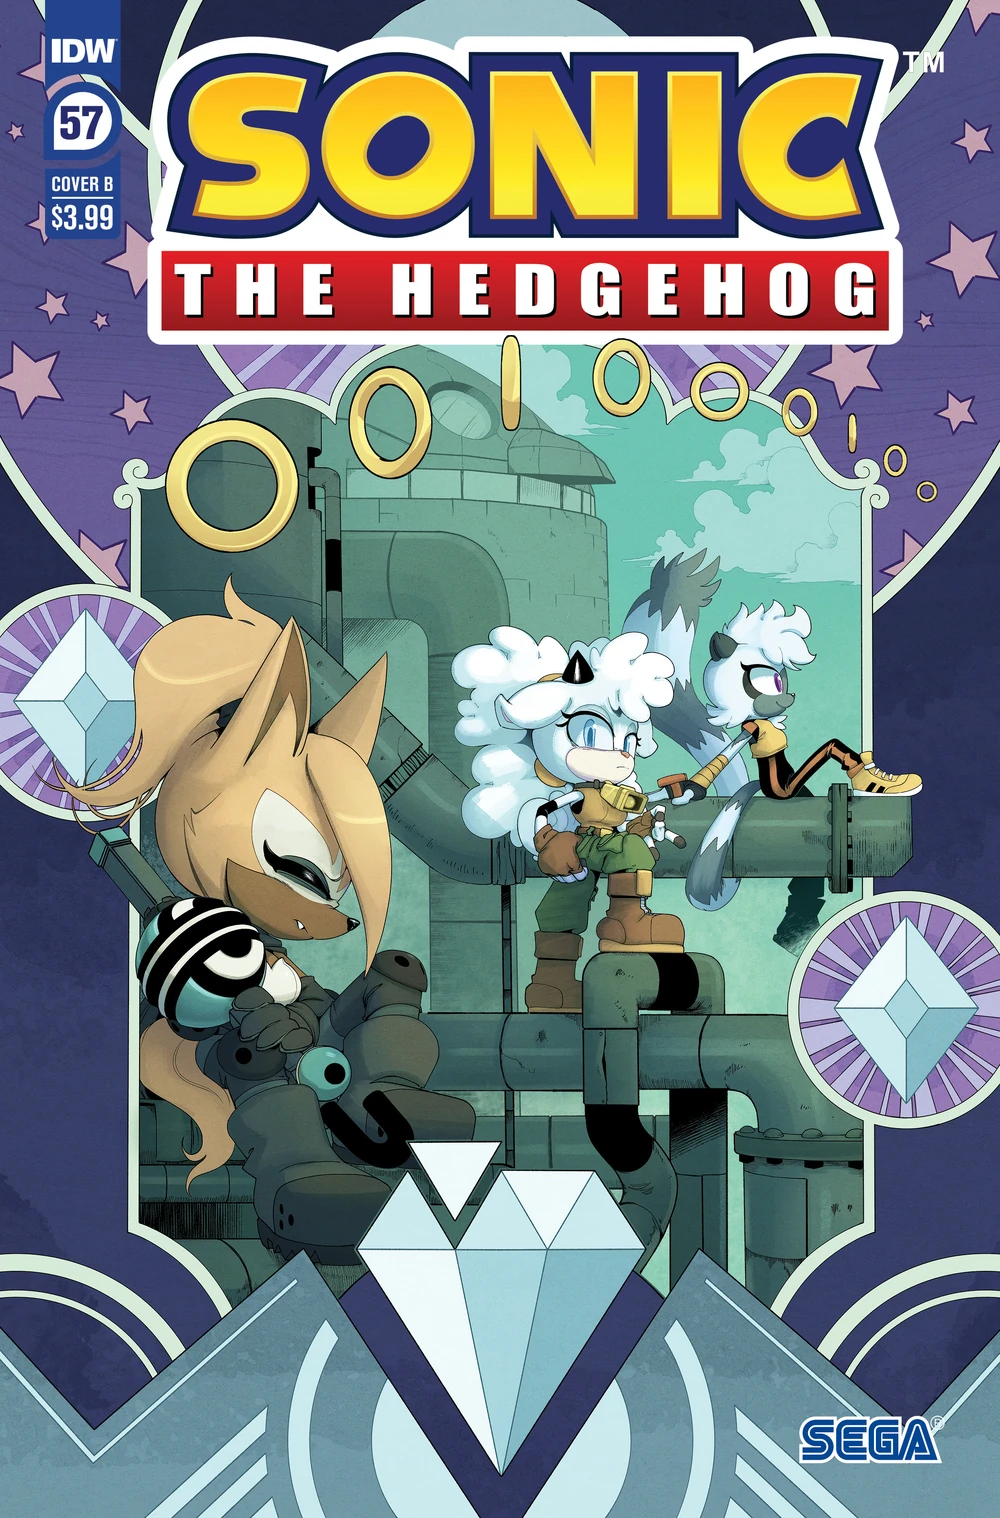 Sonic The Hedgehog #57 Cover B